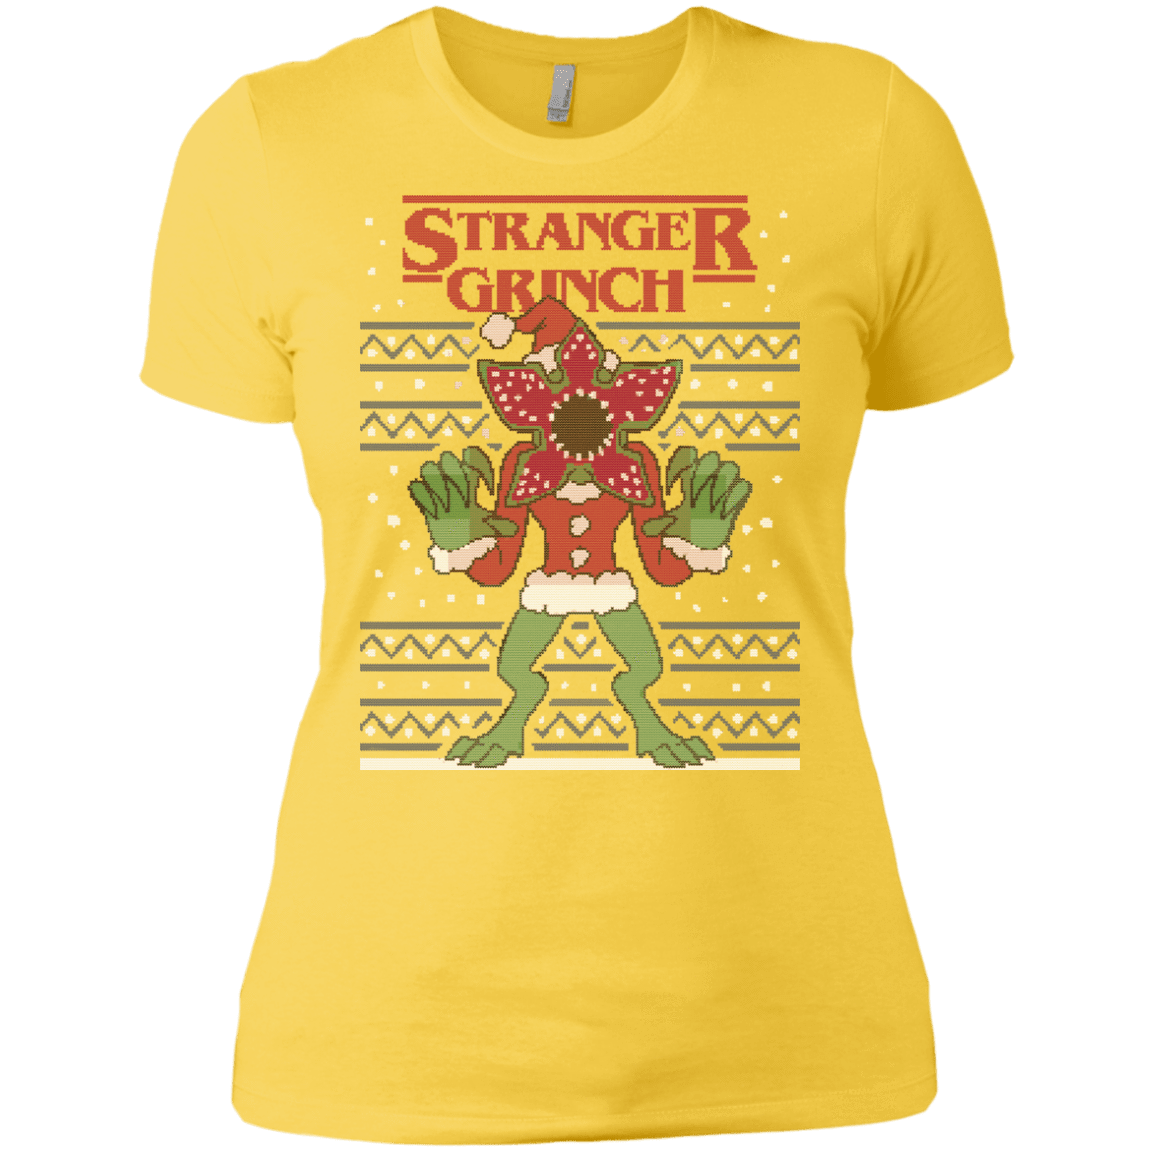 T-Shirts Vibrant Yellow / X-Small Stranger Grinch Women's Premium T-Shirt